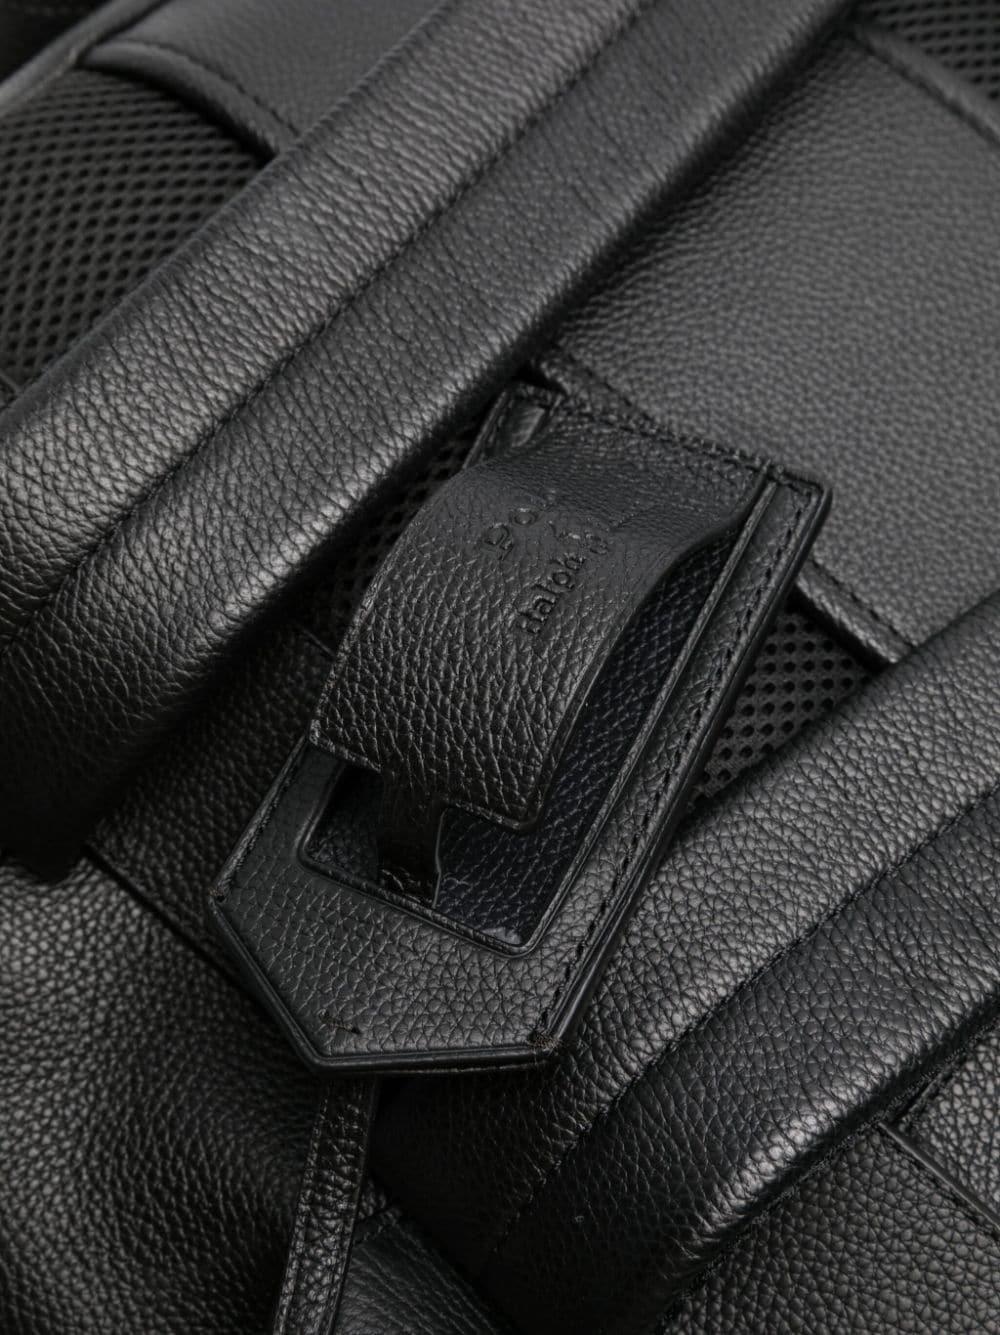 Polo Ralph Lauren Men's Leather Backpack - Black